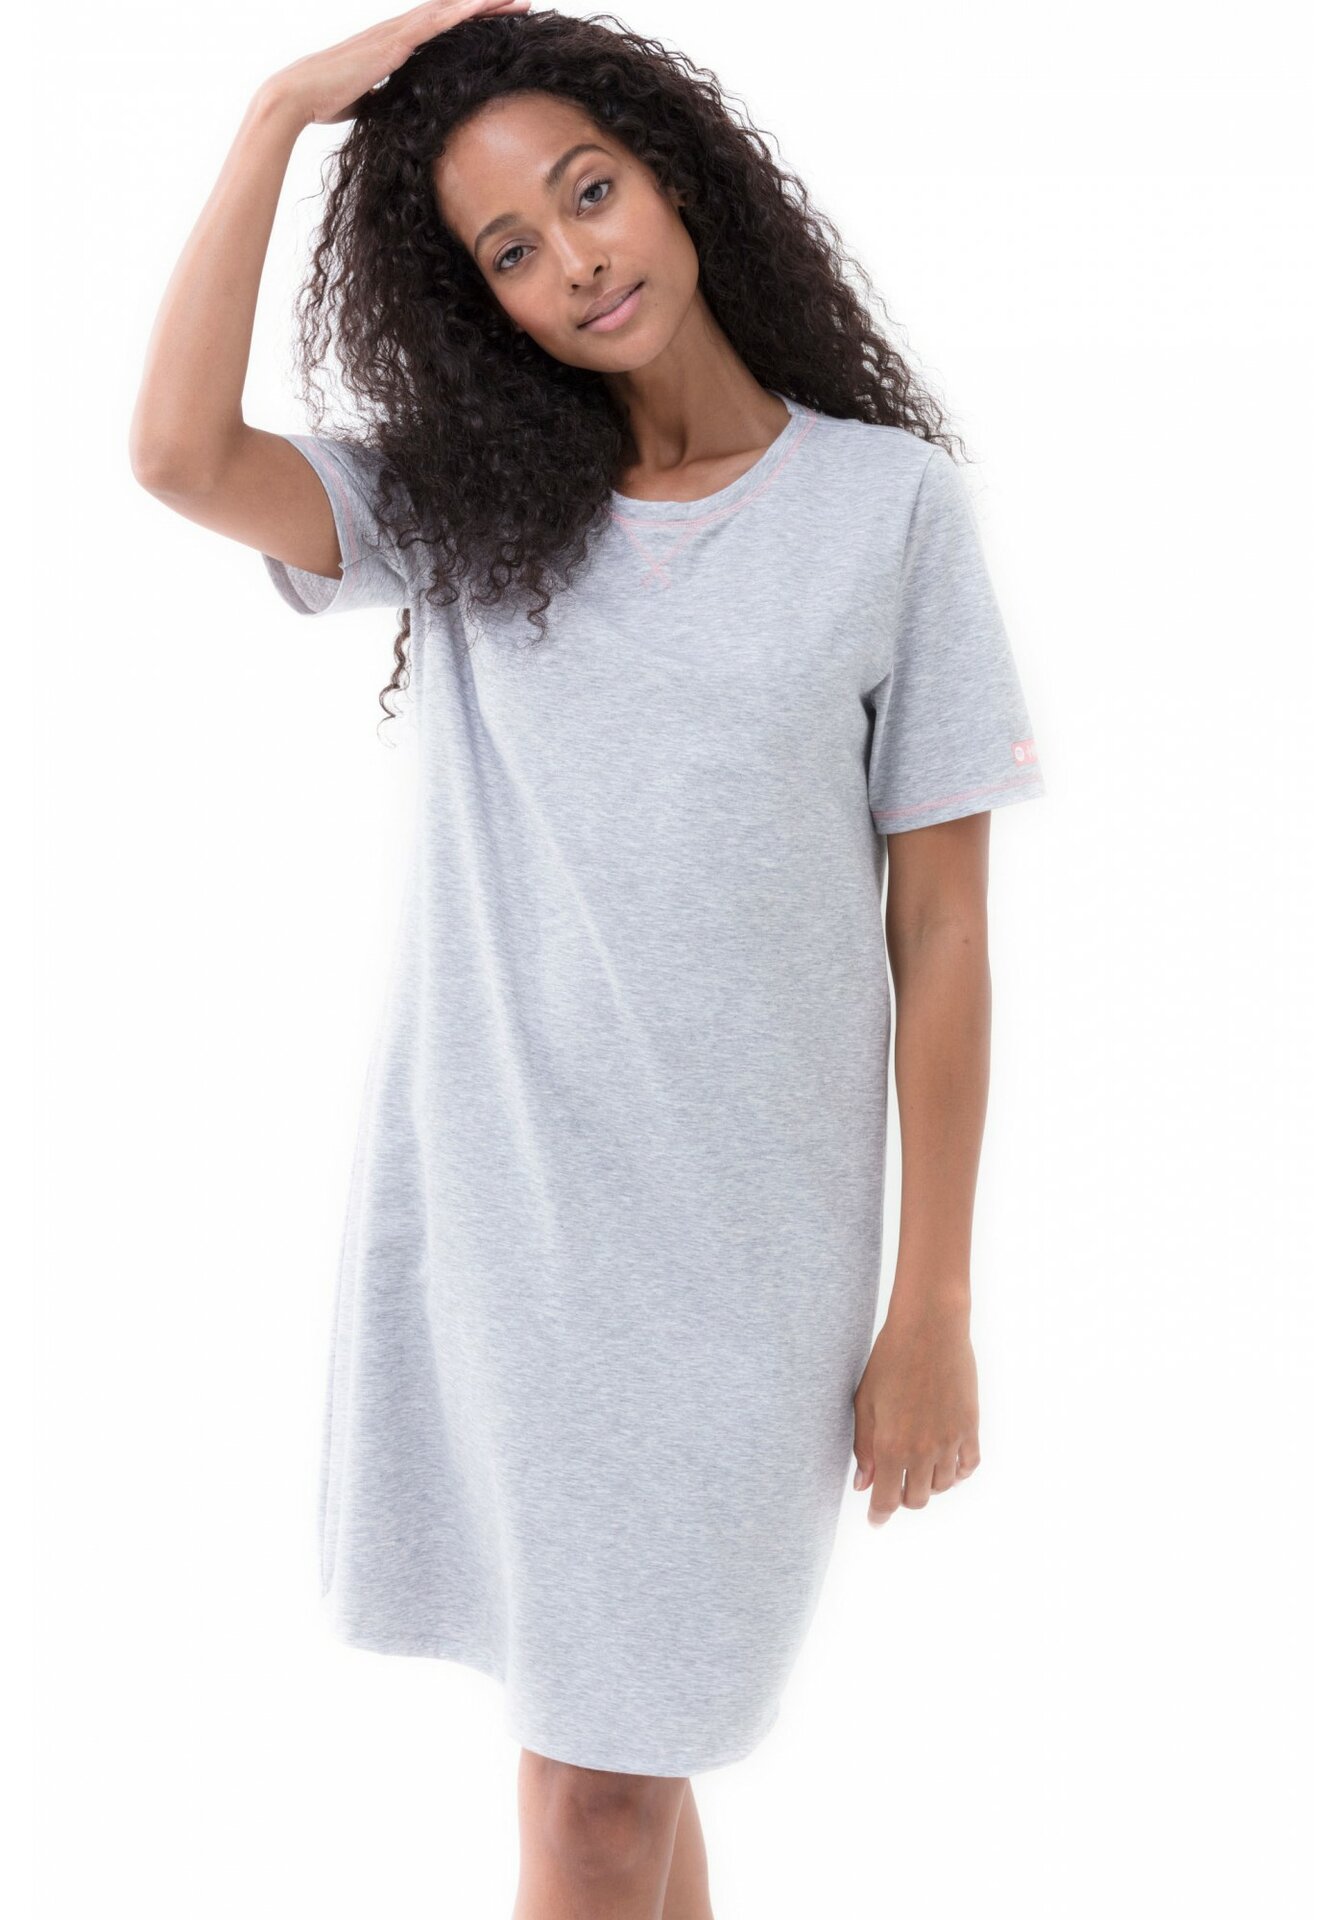 Mey Serie N8TEX Damen Nachthemd Kurzarm